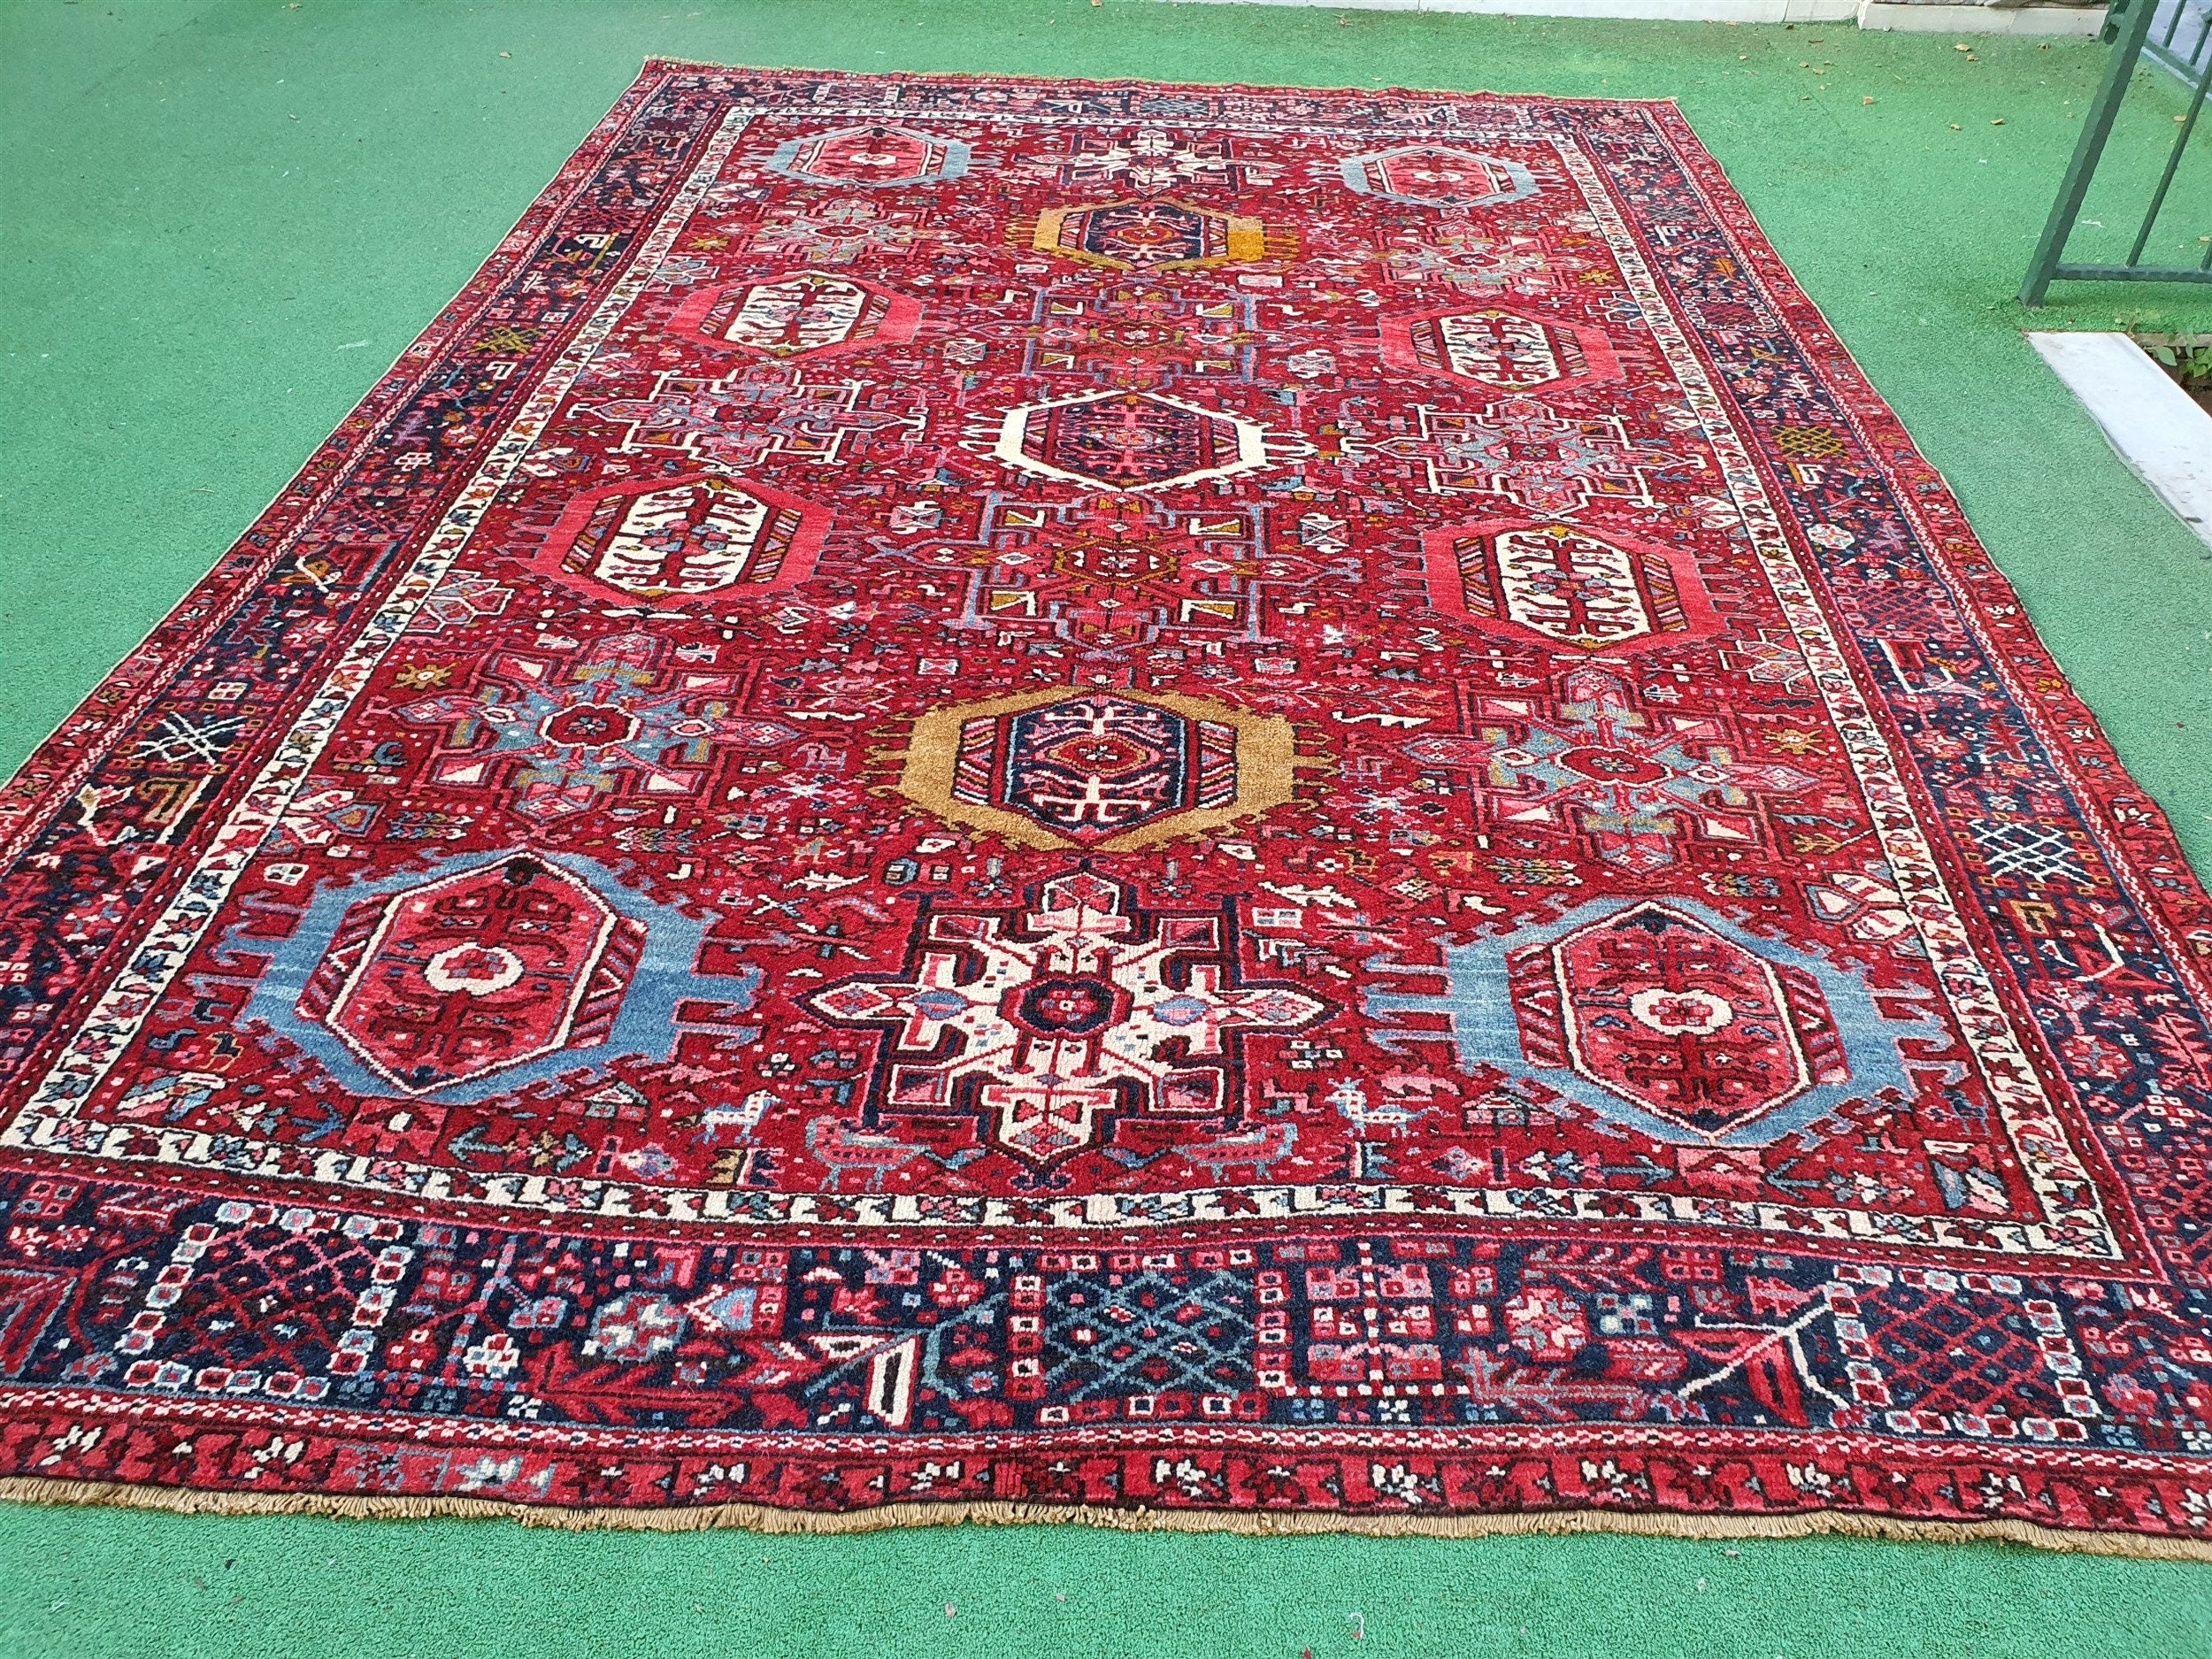 Vintage Persian Rug 12 x 8 ft Red Blue Turkish  Floral Medallion Large Floor Rug., Handmade Boho Rustic Natural Wool Living Dining Room Rug